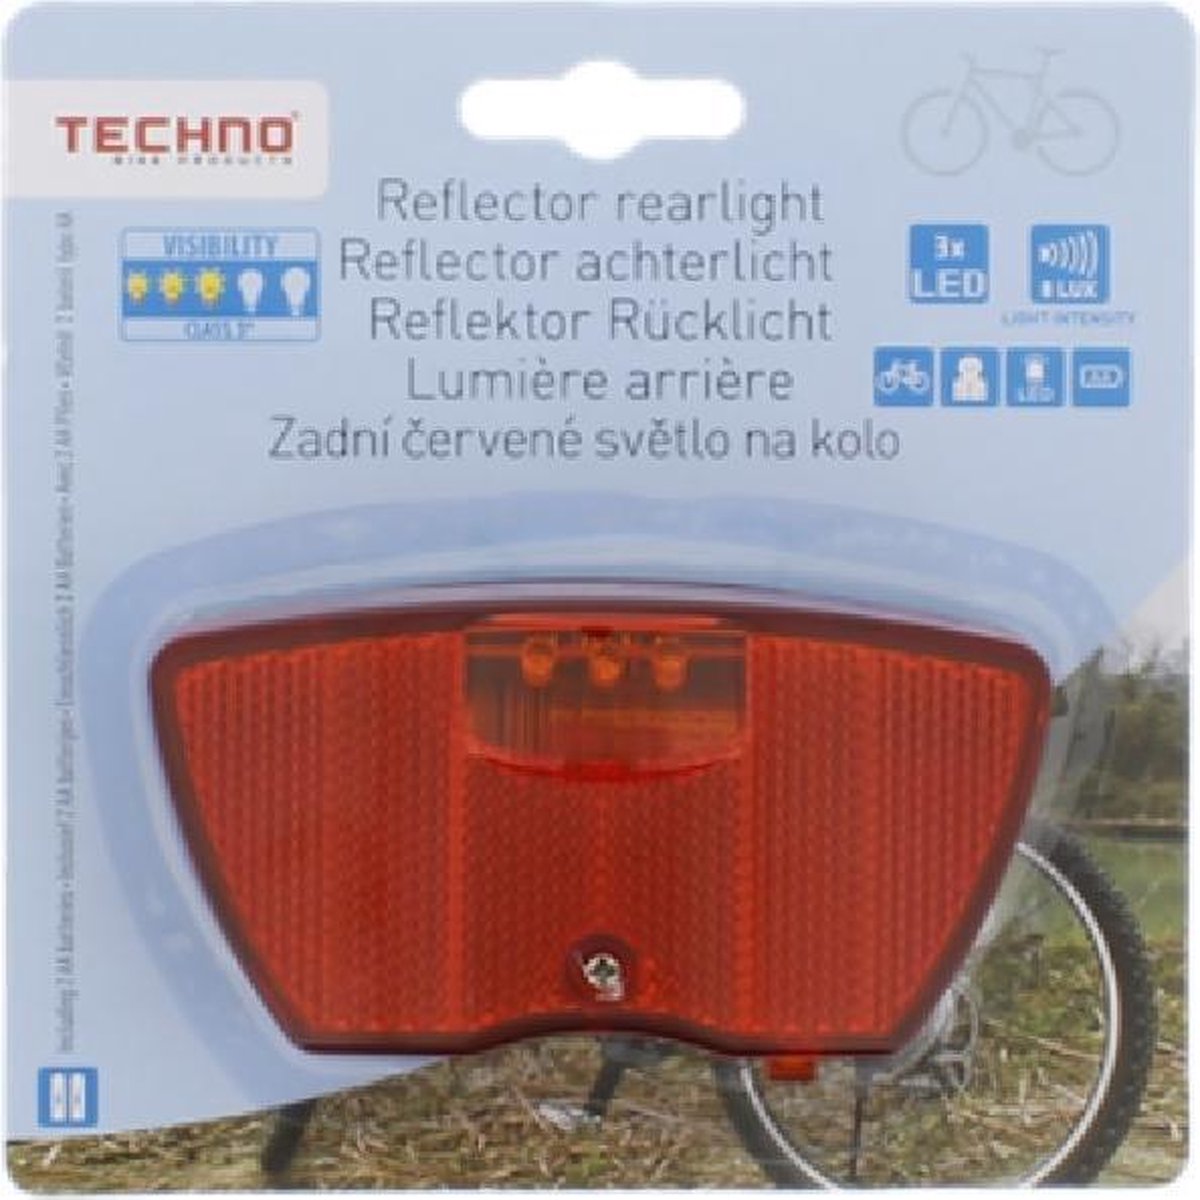 Reflector Achterlicht - 3x led - Class 3 | Fiets licht | Fietsverlichting |  bol.com